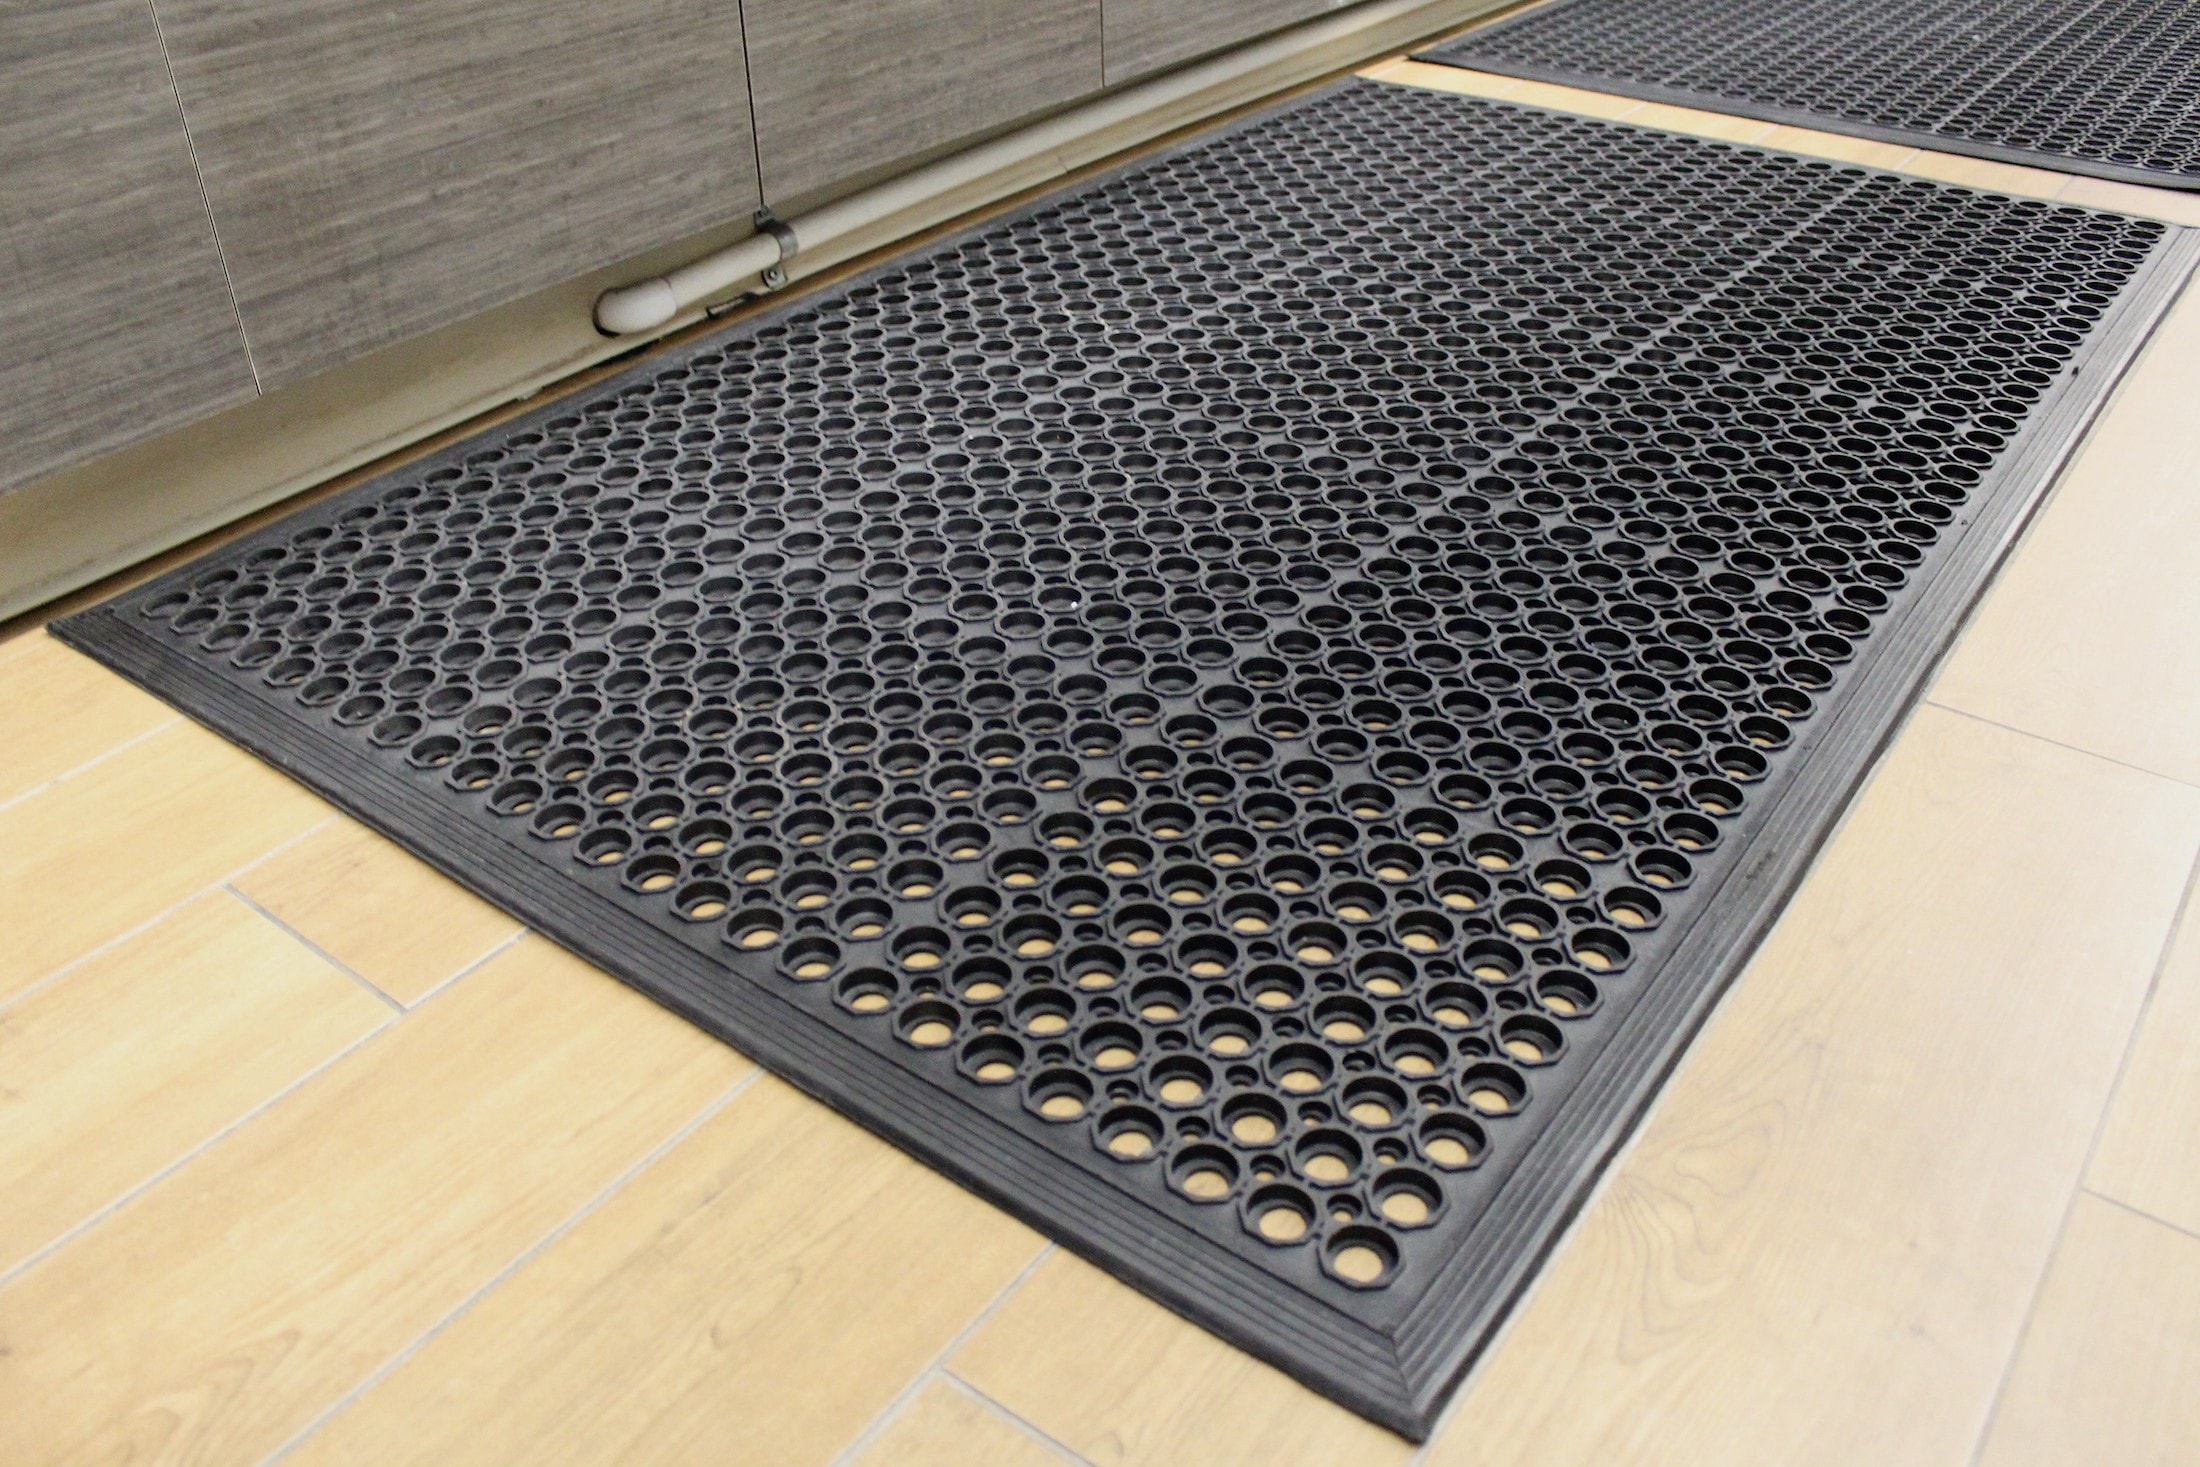 Rubber Door Mat Anti-Fatigue Floor Mat for Kitchen 36 x 60 New Commerical  Heavy Duty Mat for Resturant Non-Slip Bar Floor Mat Garage Garden